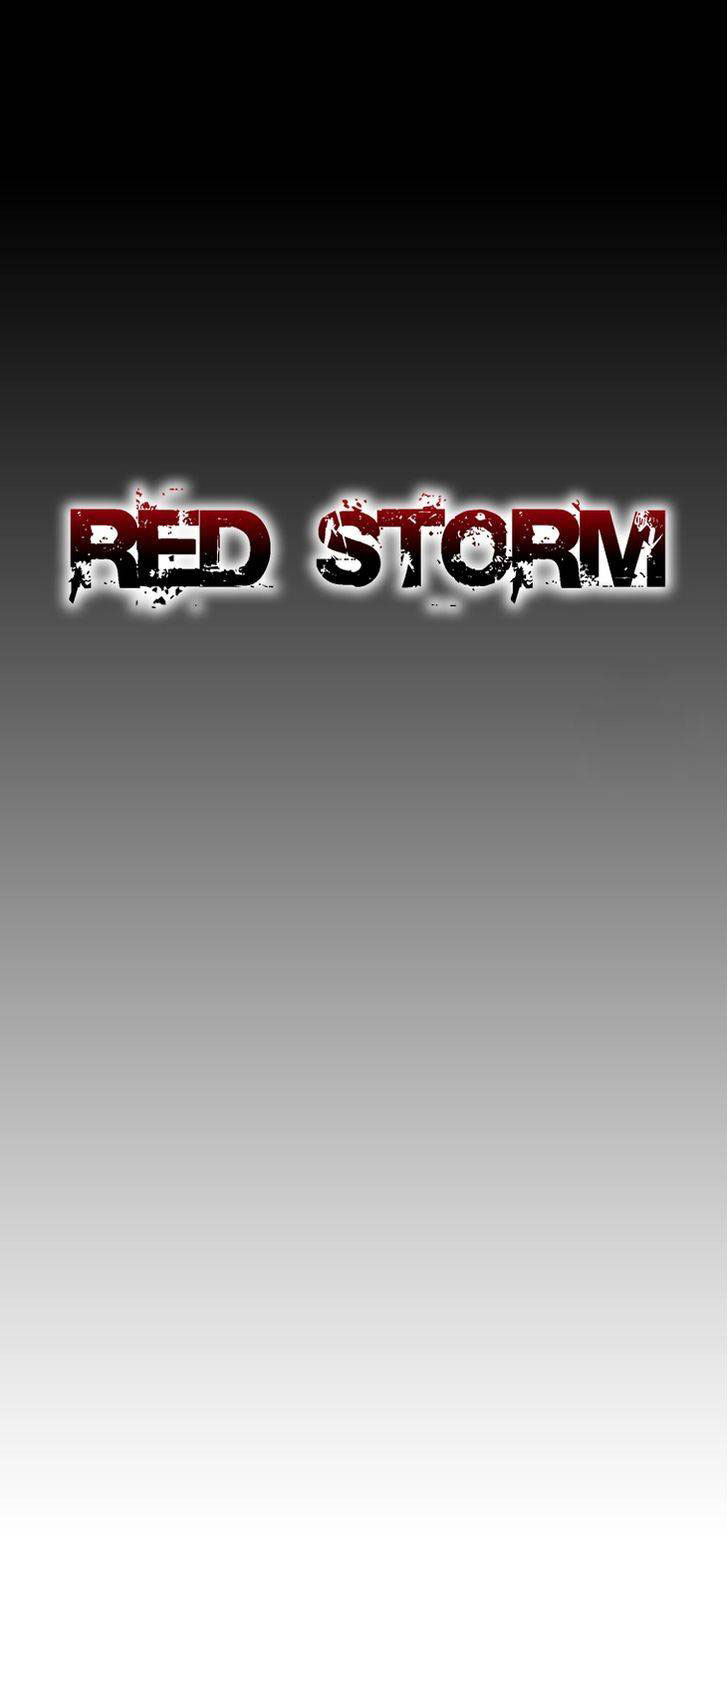 Red Storm - ch 003 Zeurel